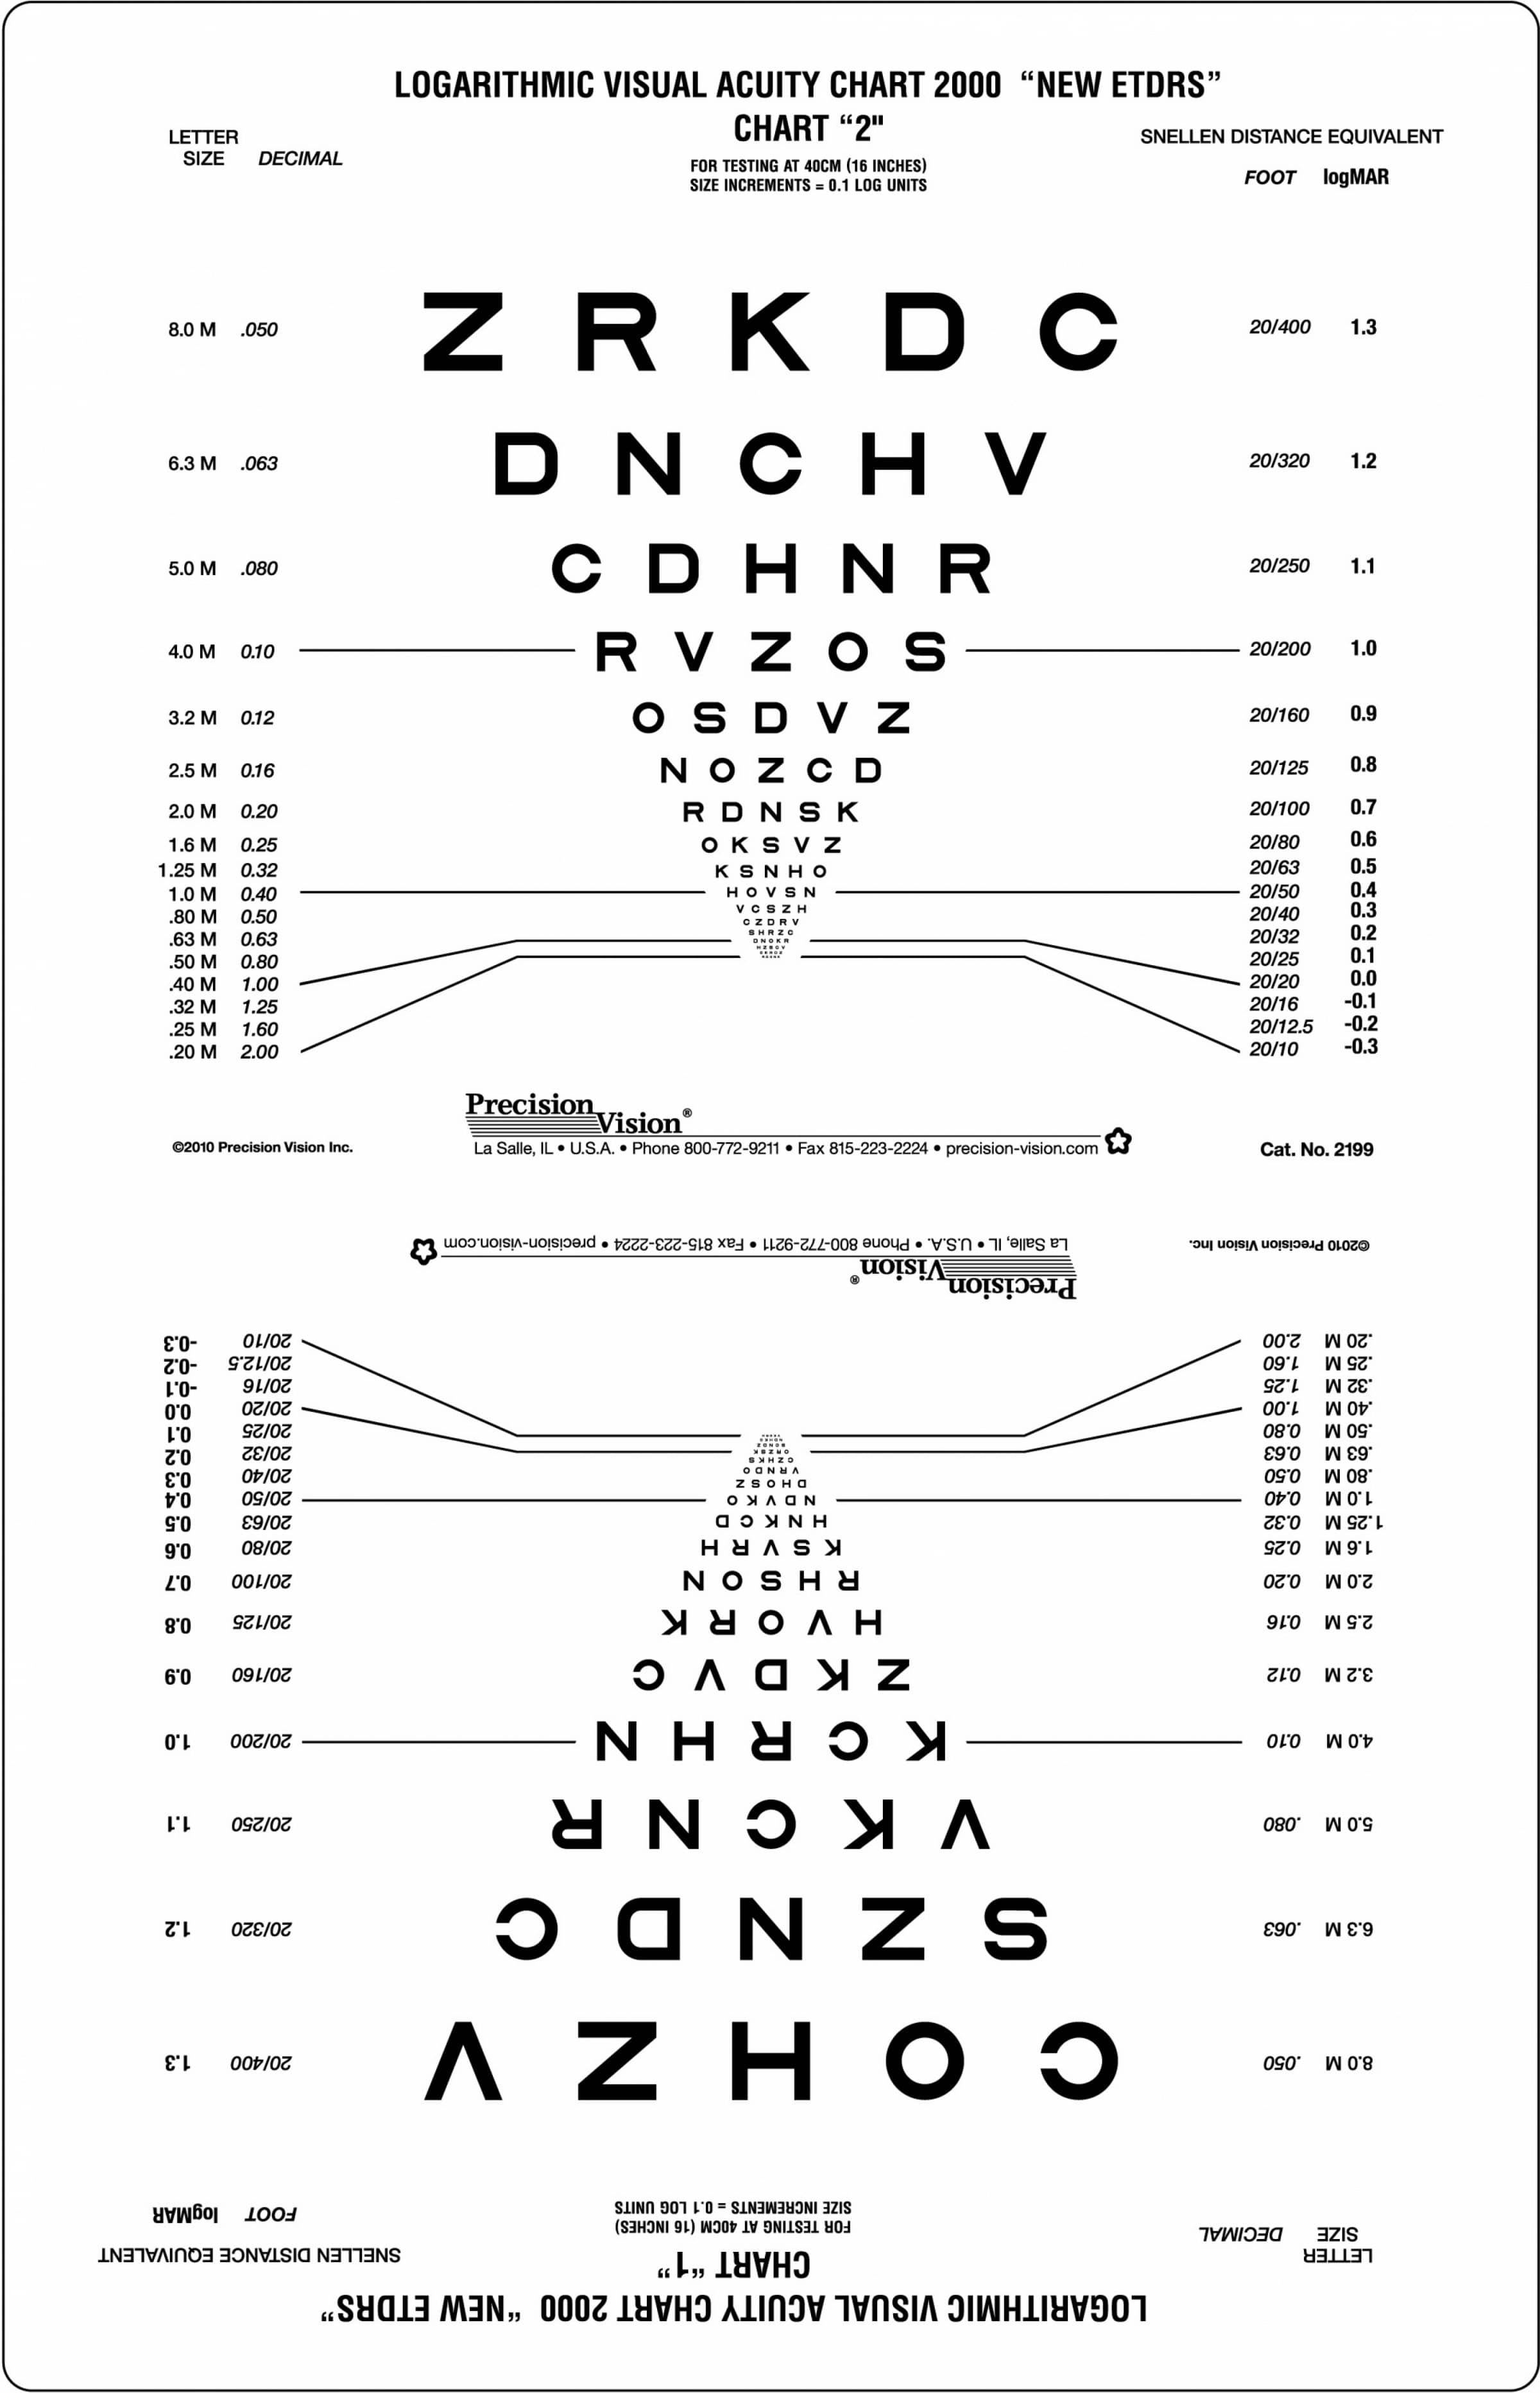 near-point-acuity-illuminated-flip-chart-precision-vision